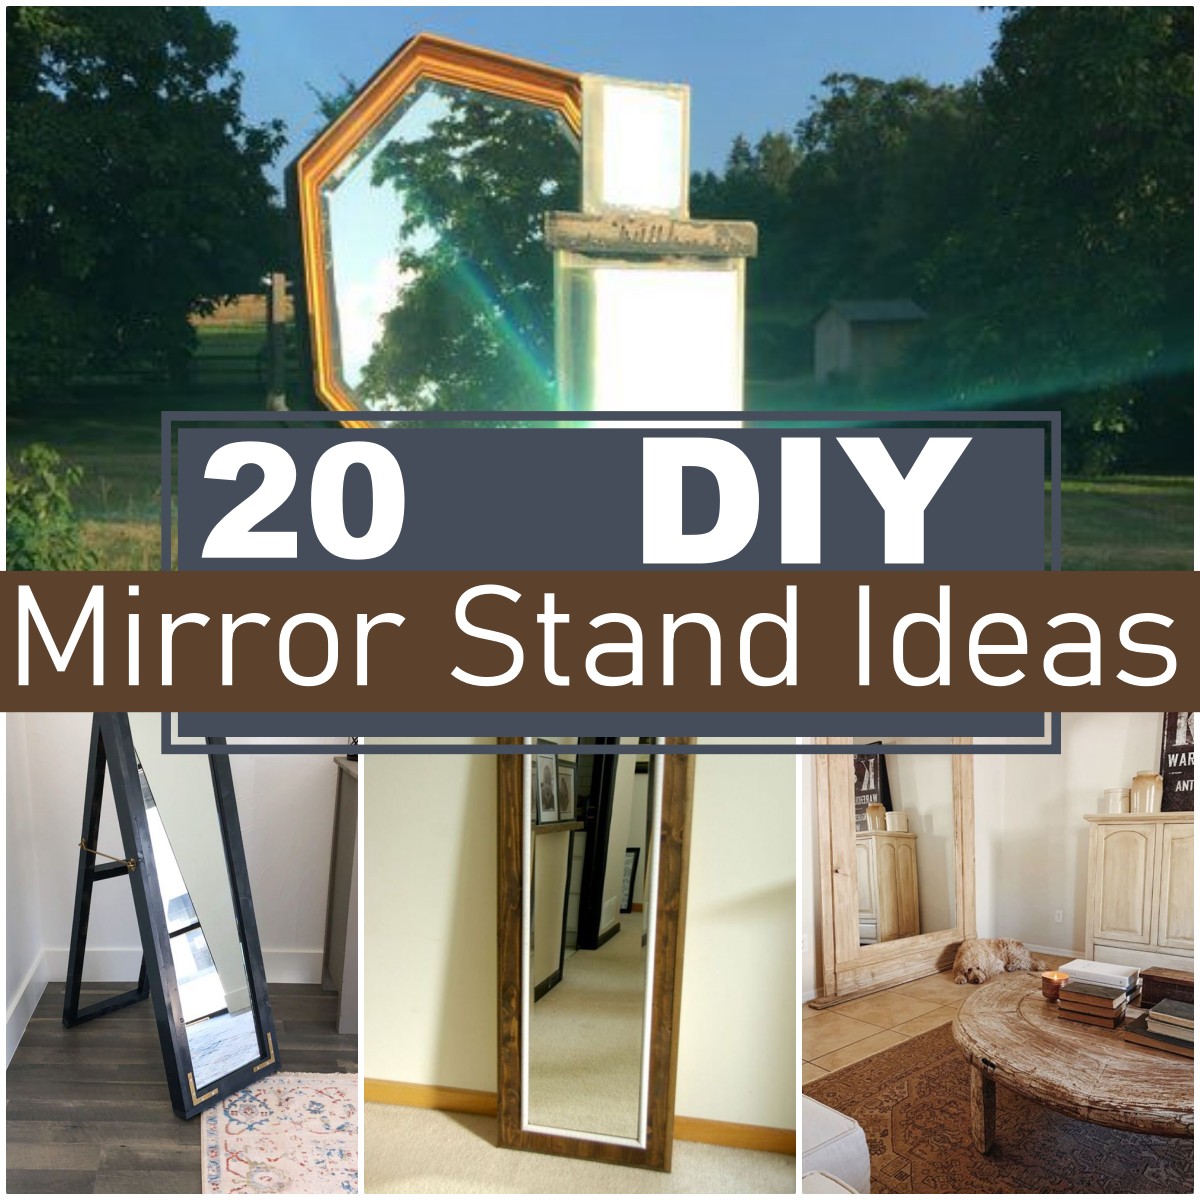 20 DIY Mirror Stand Ideas - DIY Crafts